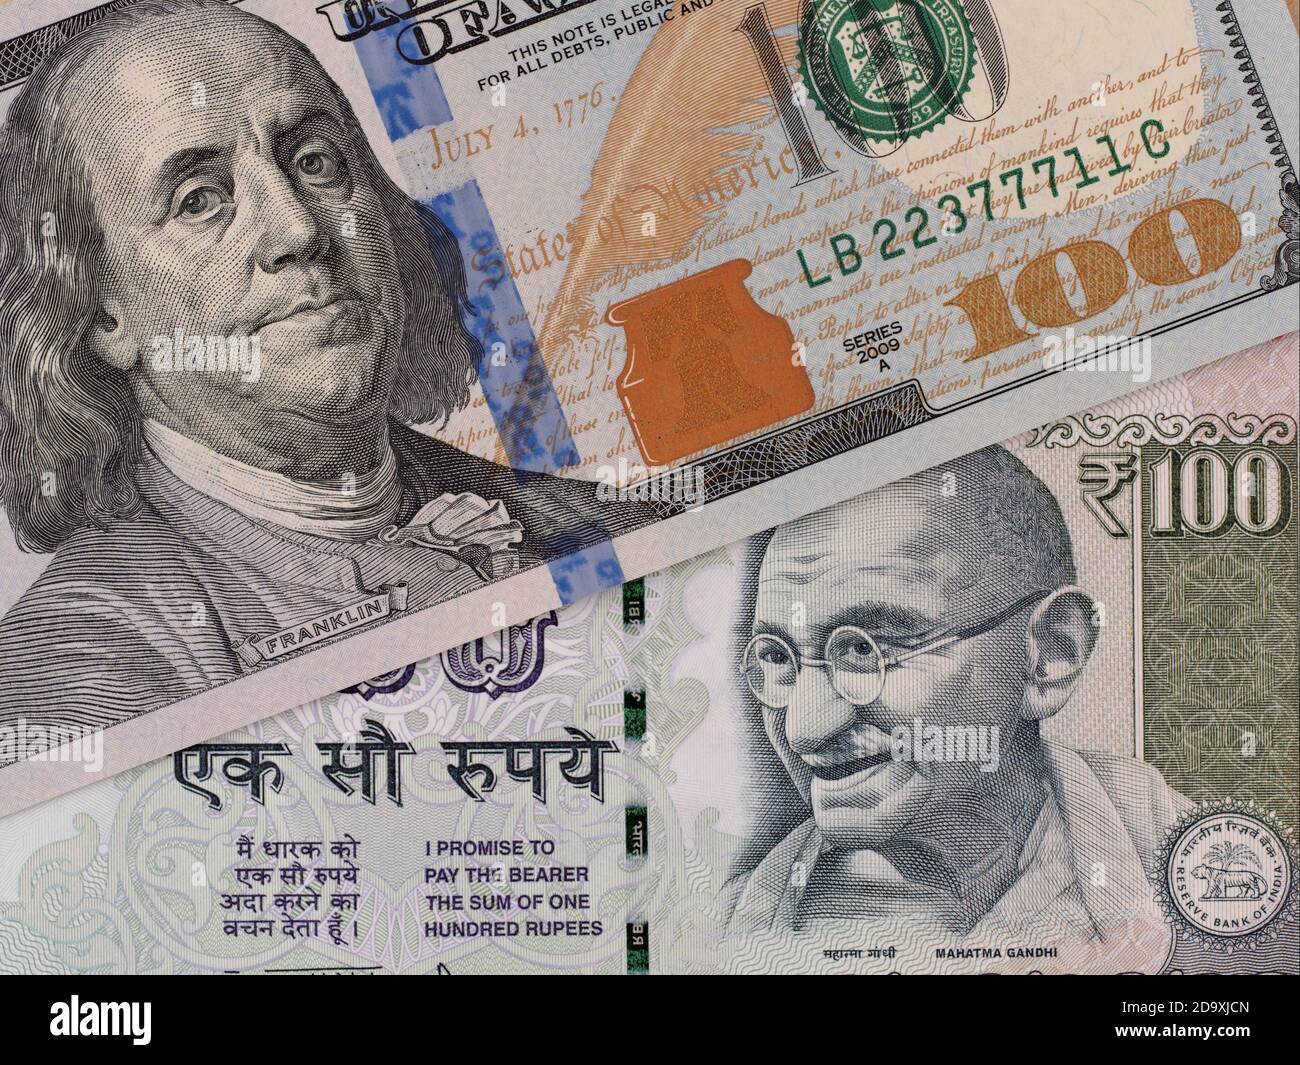 USD/INR (U.S. DOLLAR/INDIAN RUPEE)